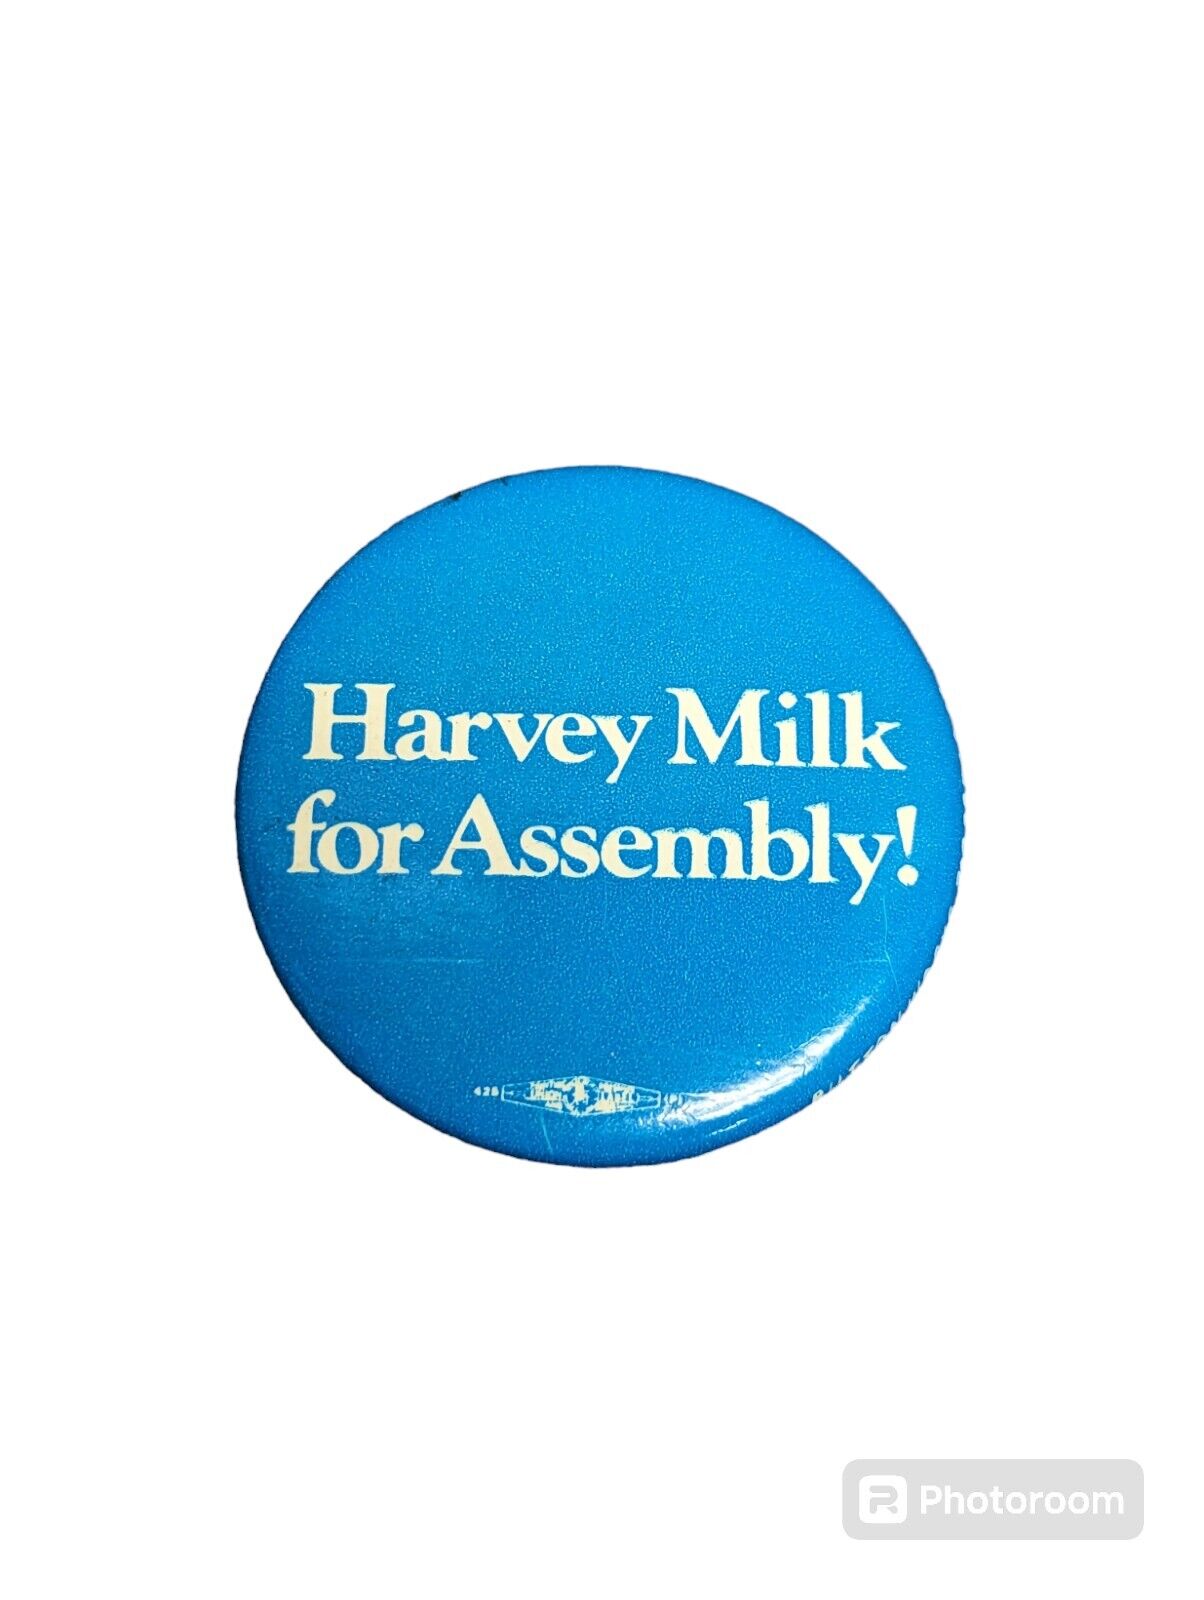 HARVEY MILK for Assembly Vintage CAMPAIGN BUTTON San Francisco Election LGBTQ